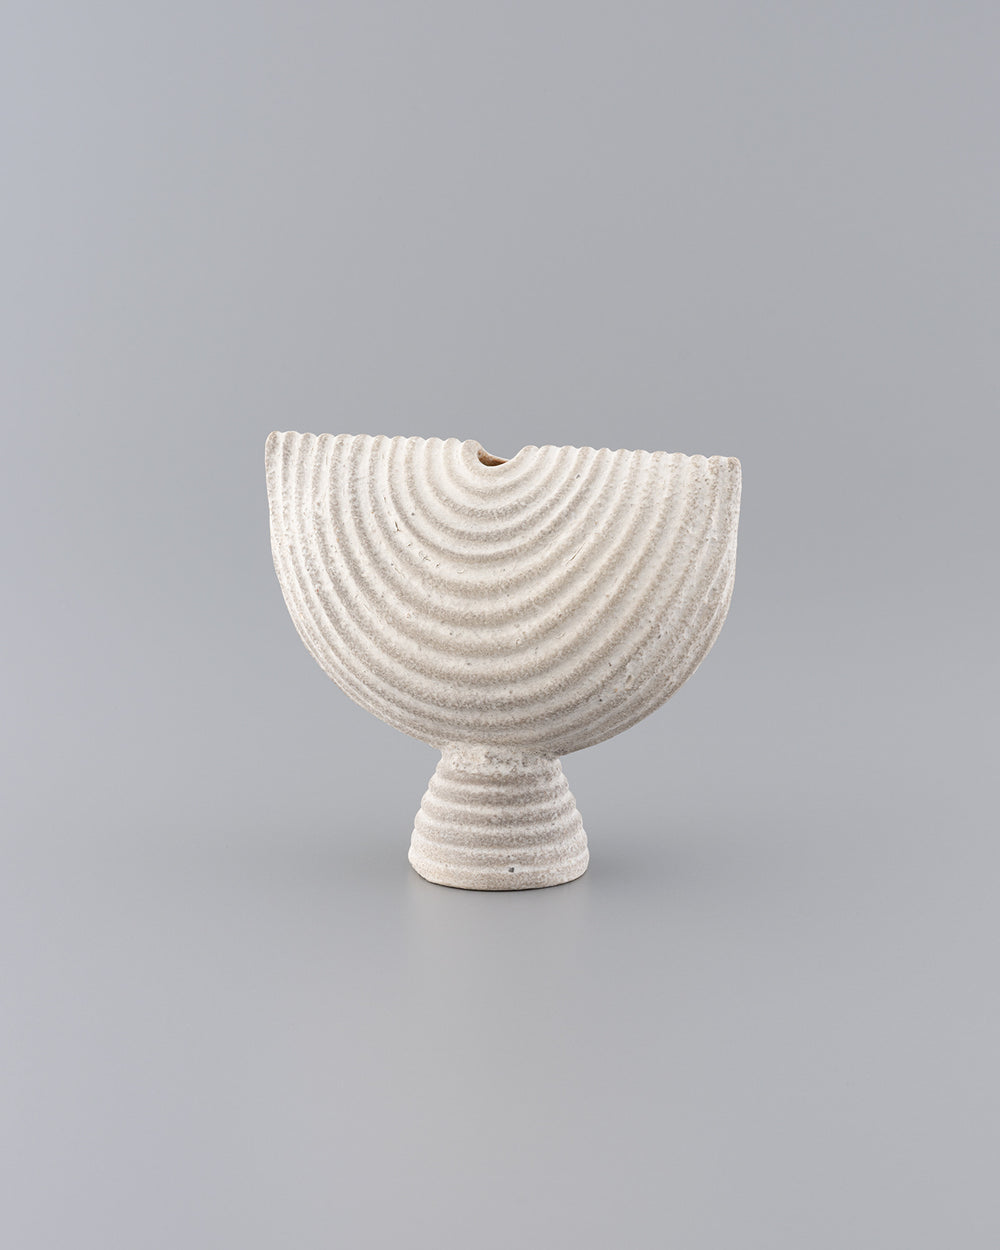 Ripple Vase Small 05